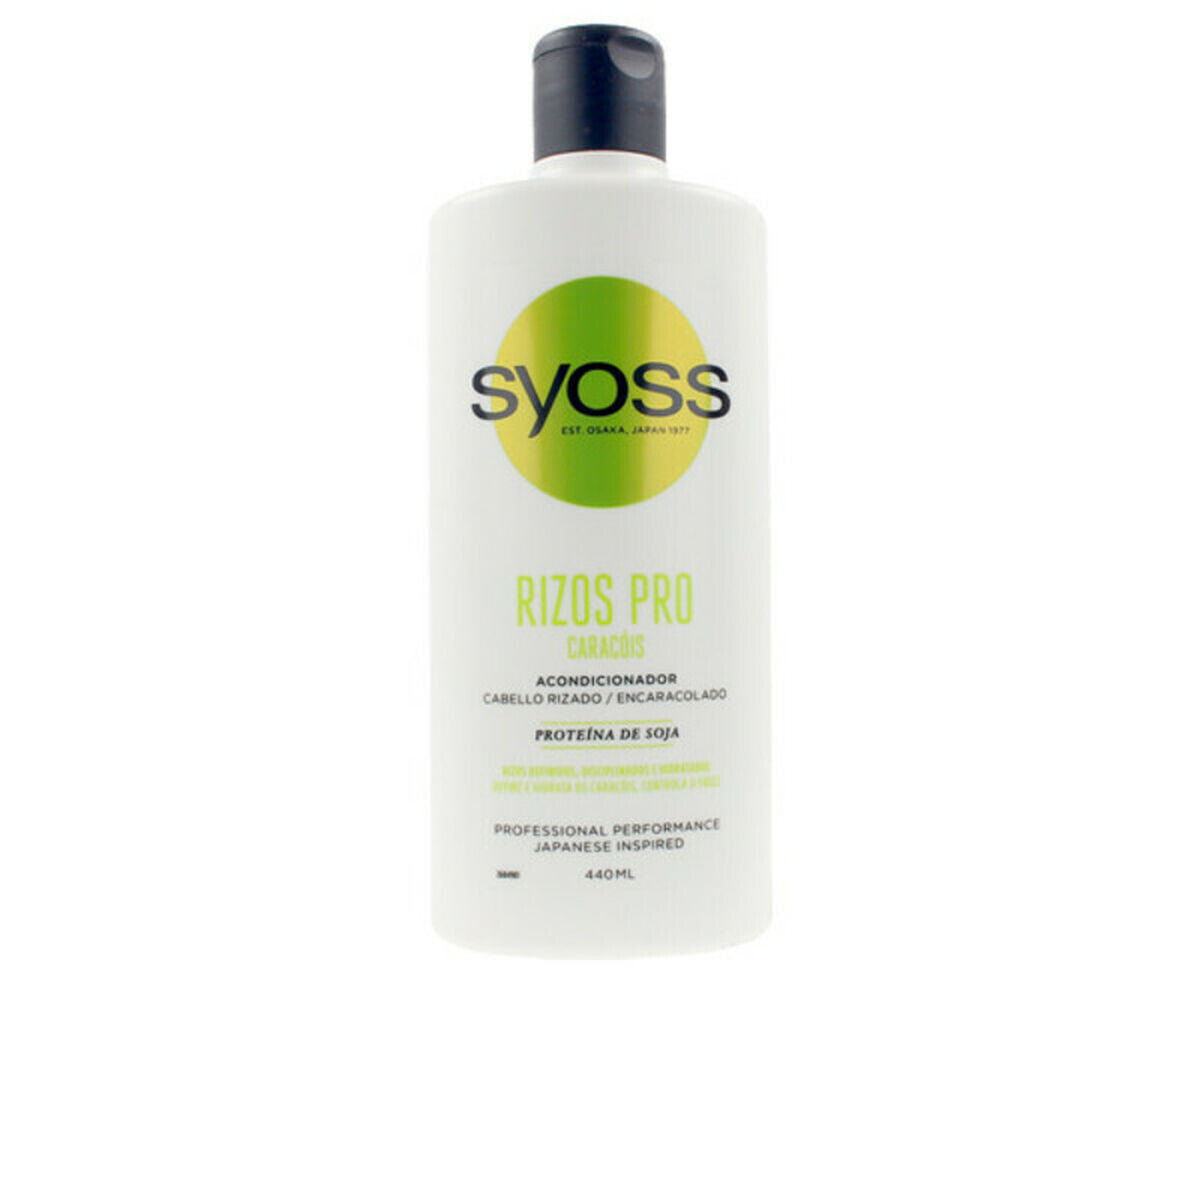 Defined Curls Conditioner Pro Syoss Rizos Pro 440 ml